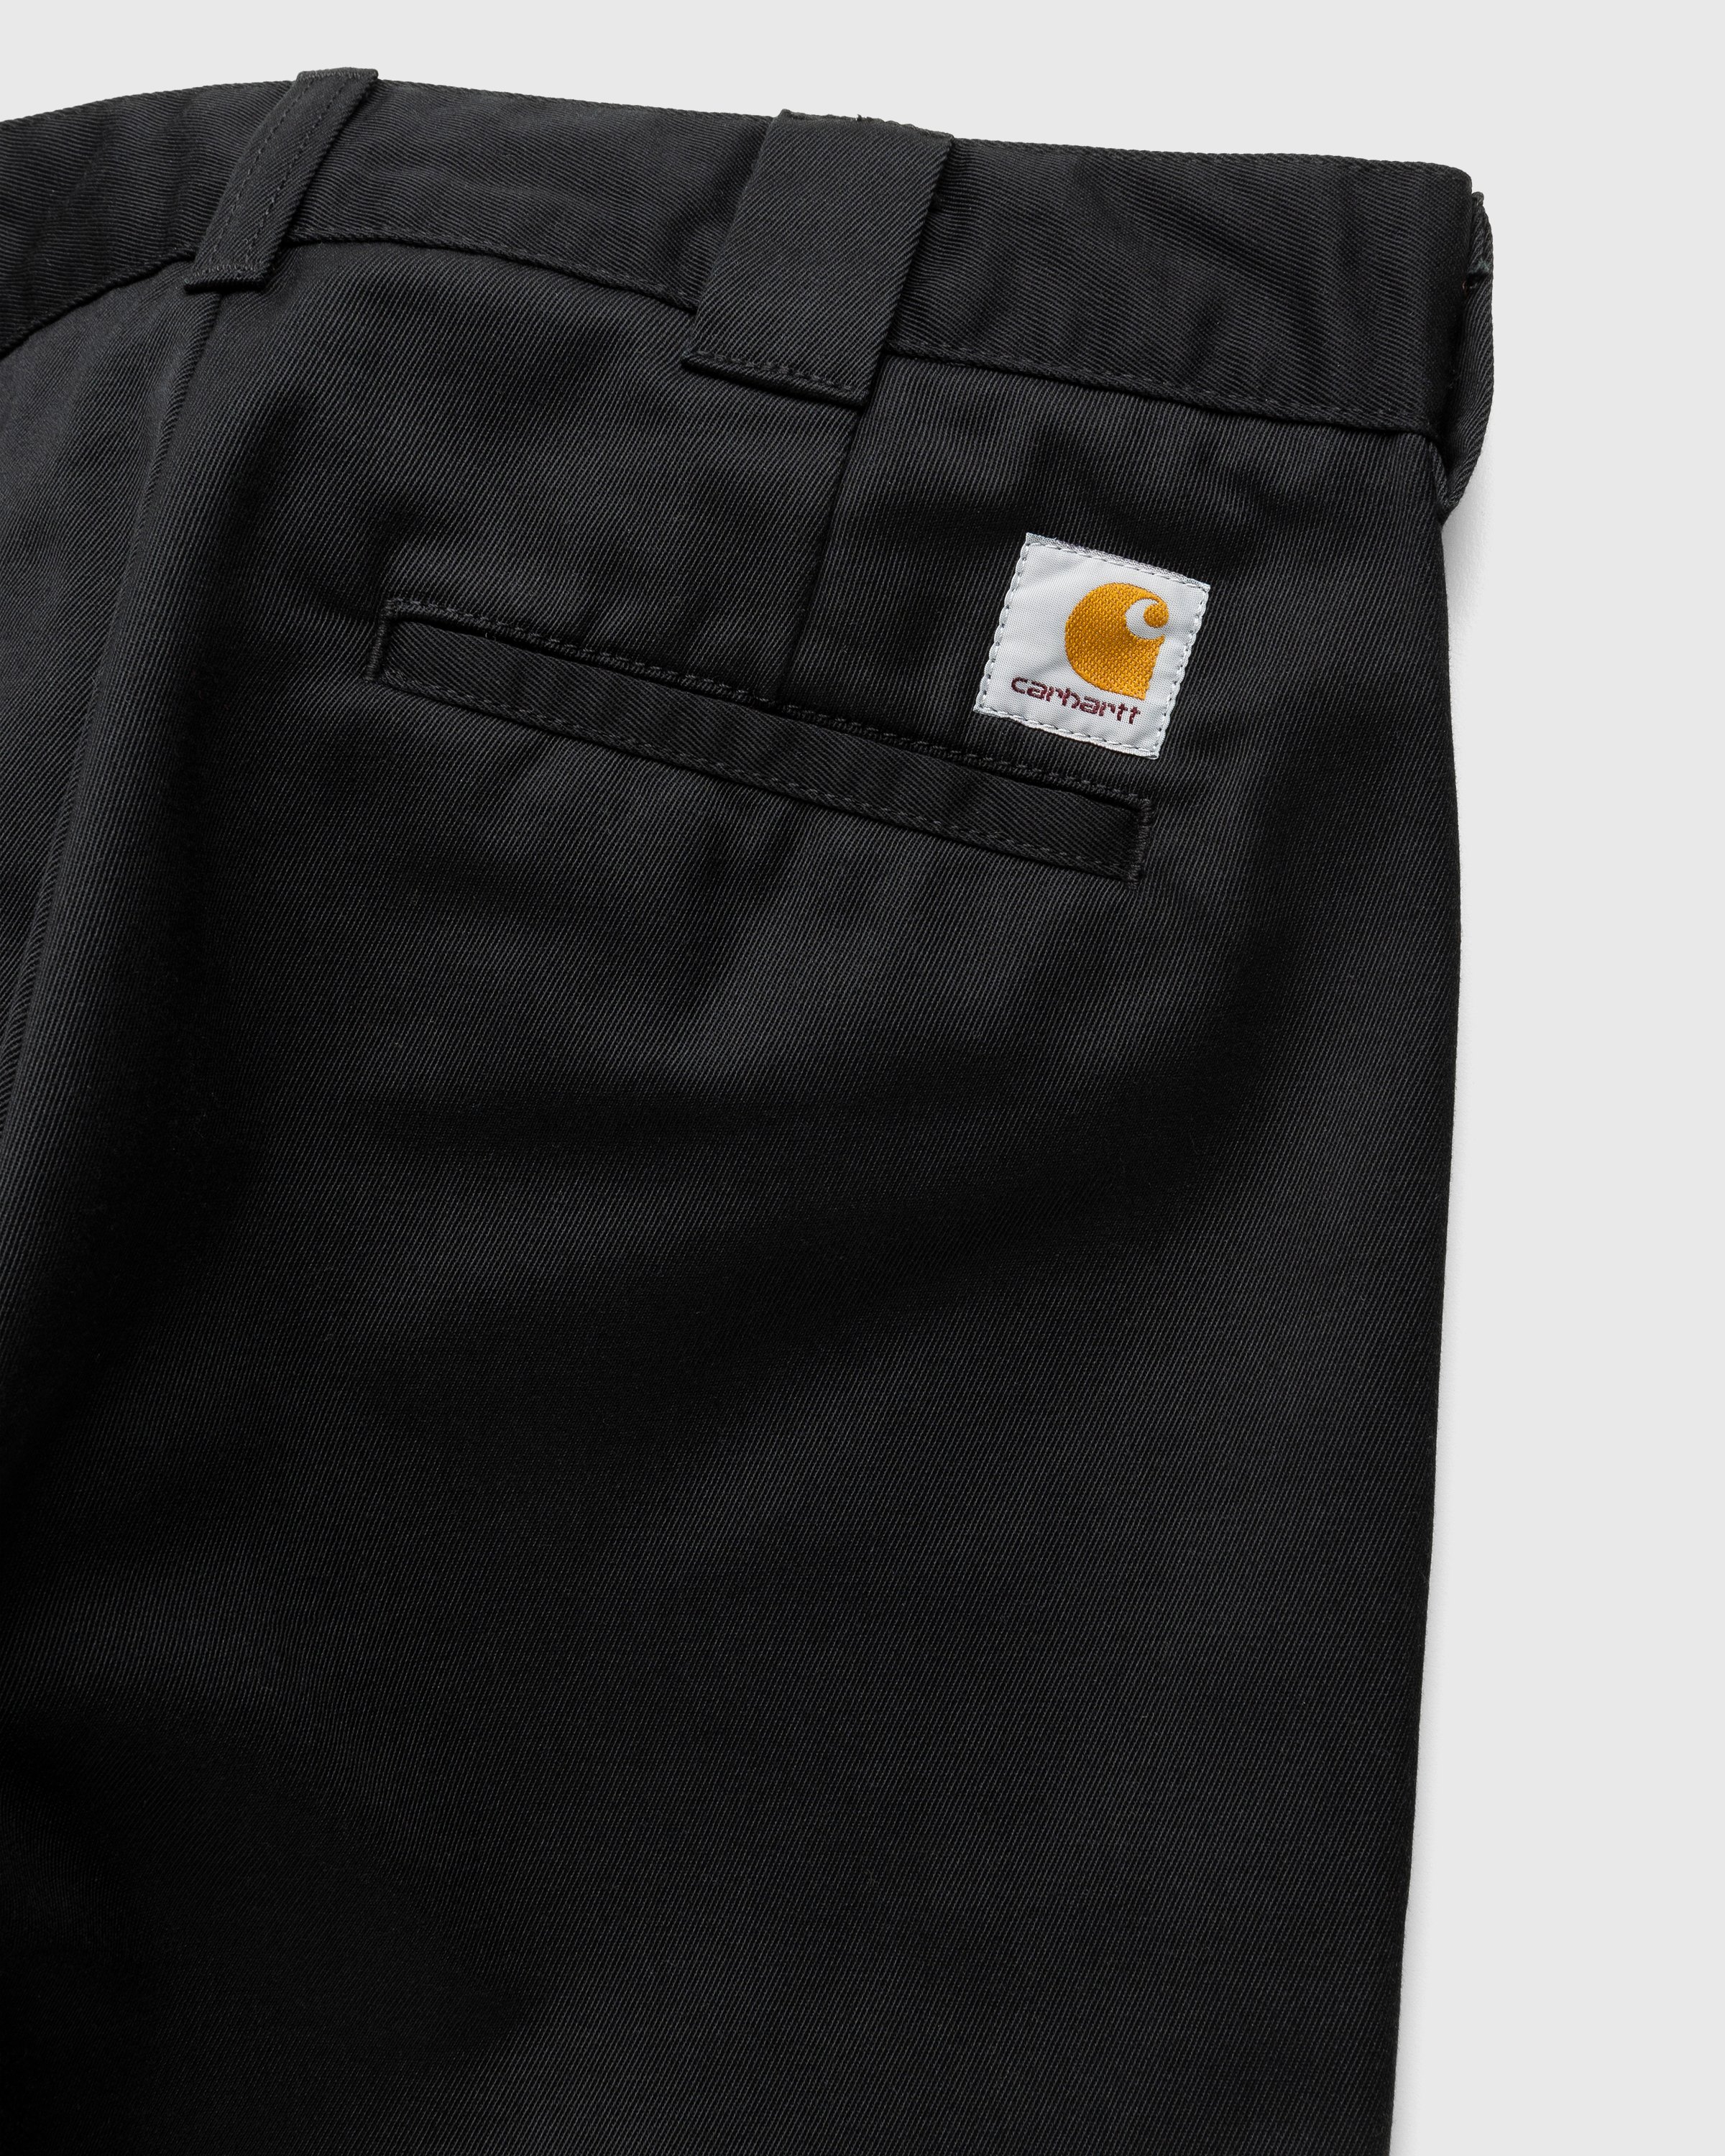 Carhartt WIP - Master Pant Black - Clothing - Black - Image 4